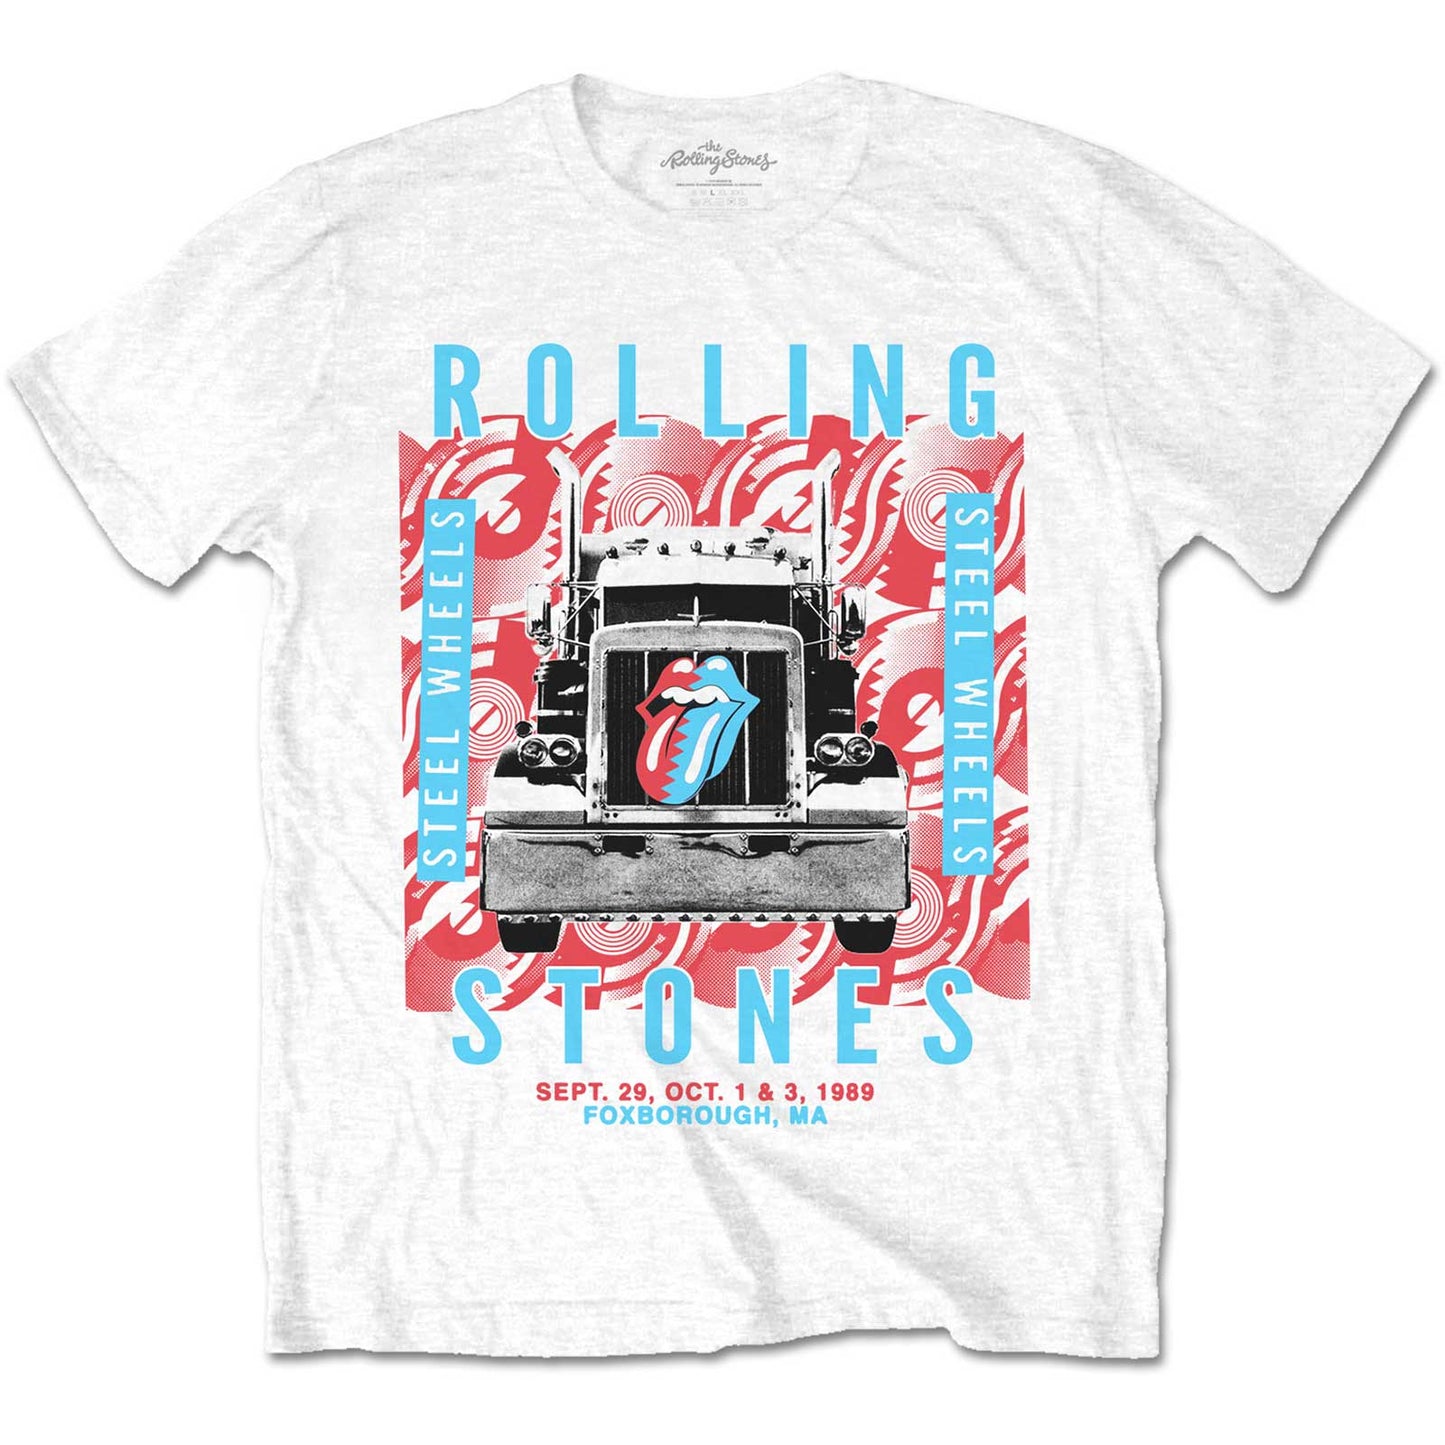 The Rolling Stones T-Shirt: Steel Wheels